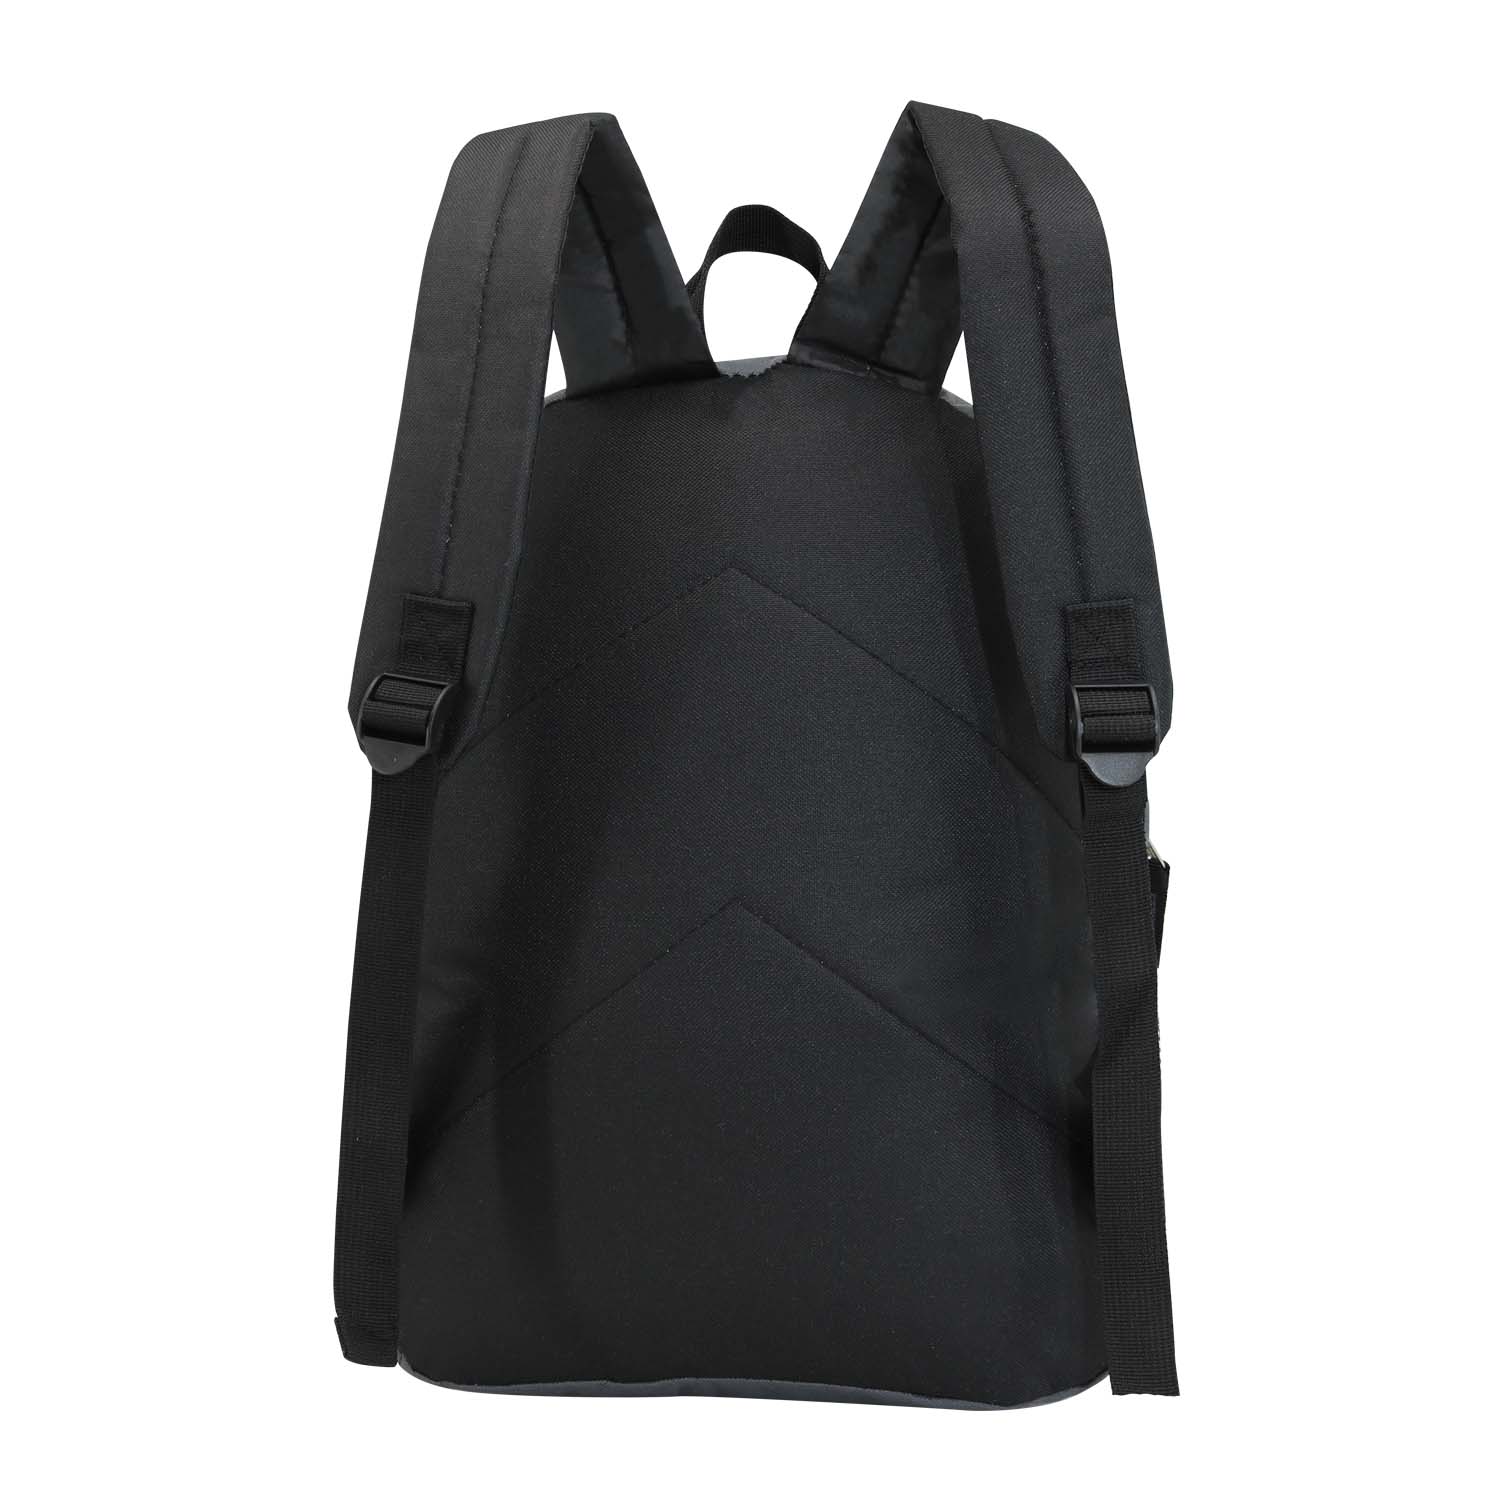 17" Wholesale Classic Charcoal Backpacks - Bulk Case of 24 Bookbags